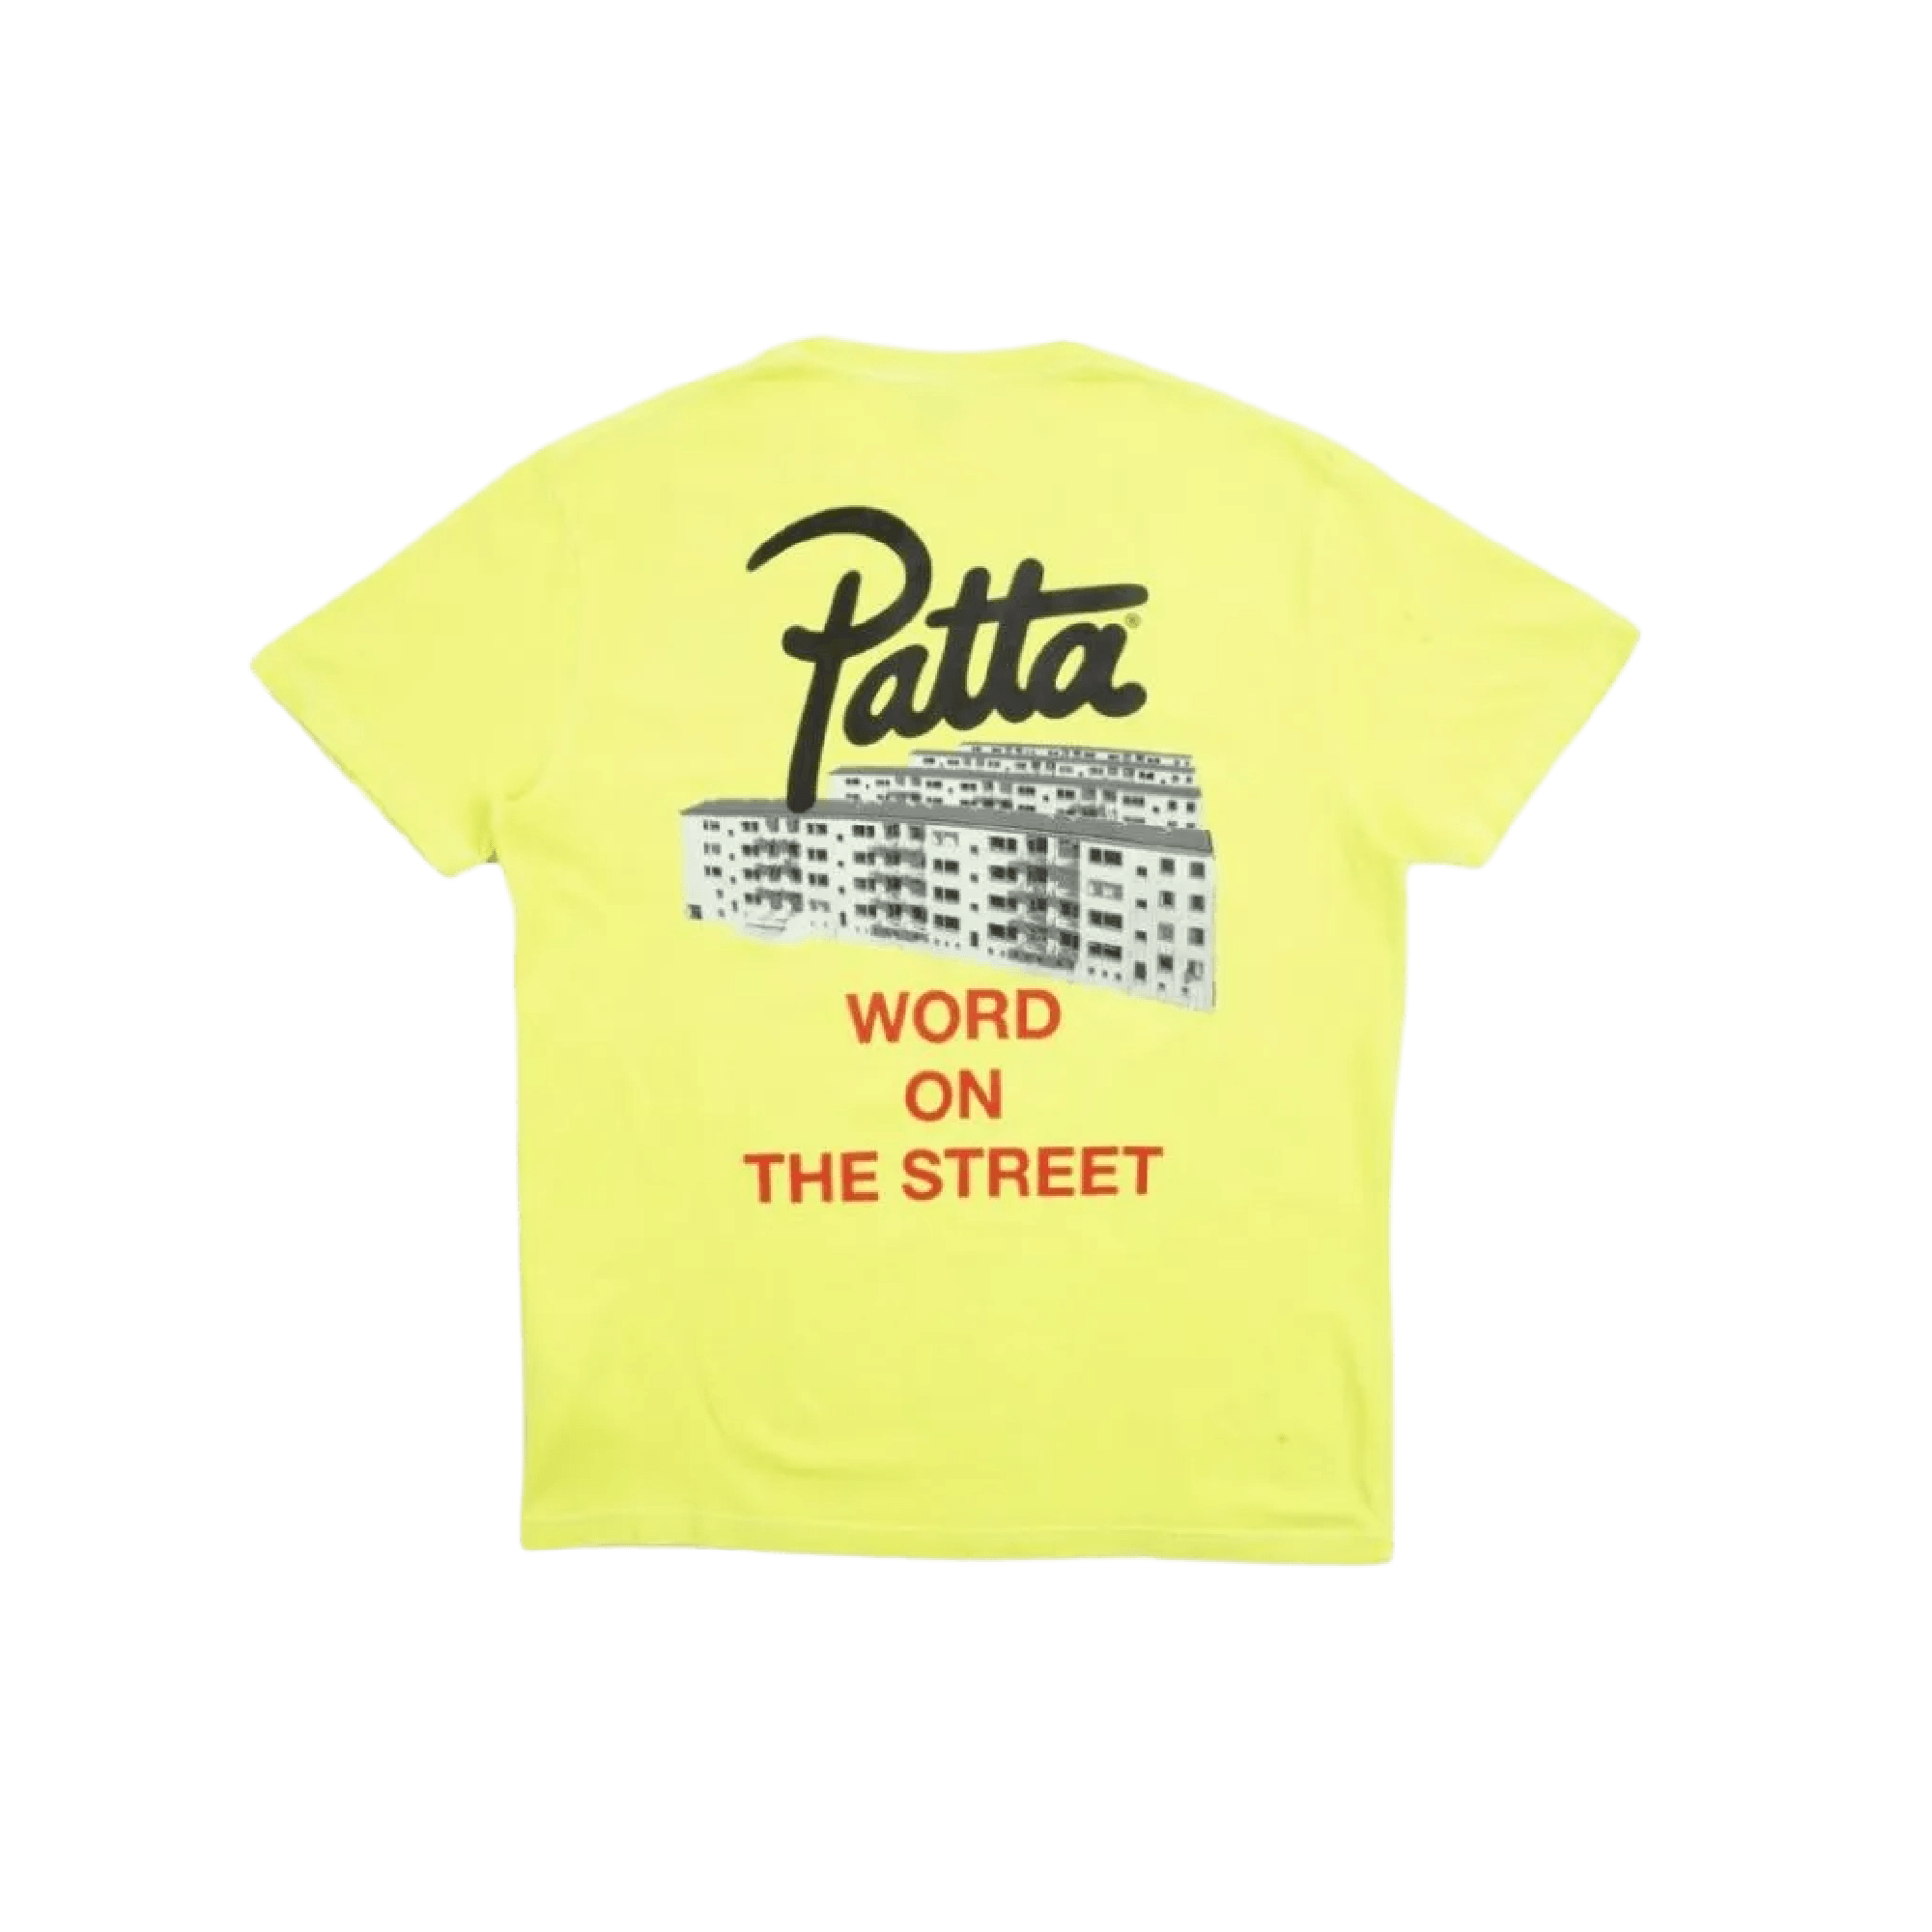 PATTA WORD ON THE STREET T-SHIRT